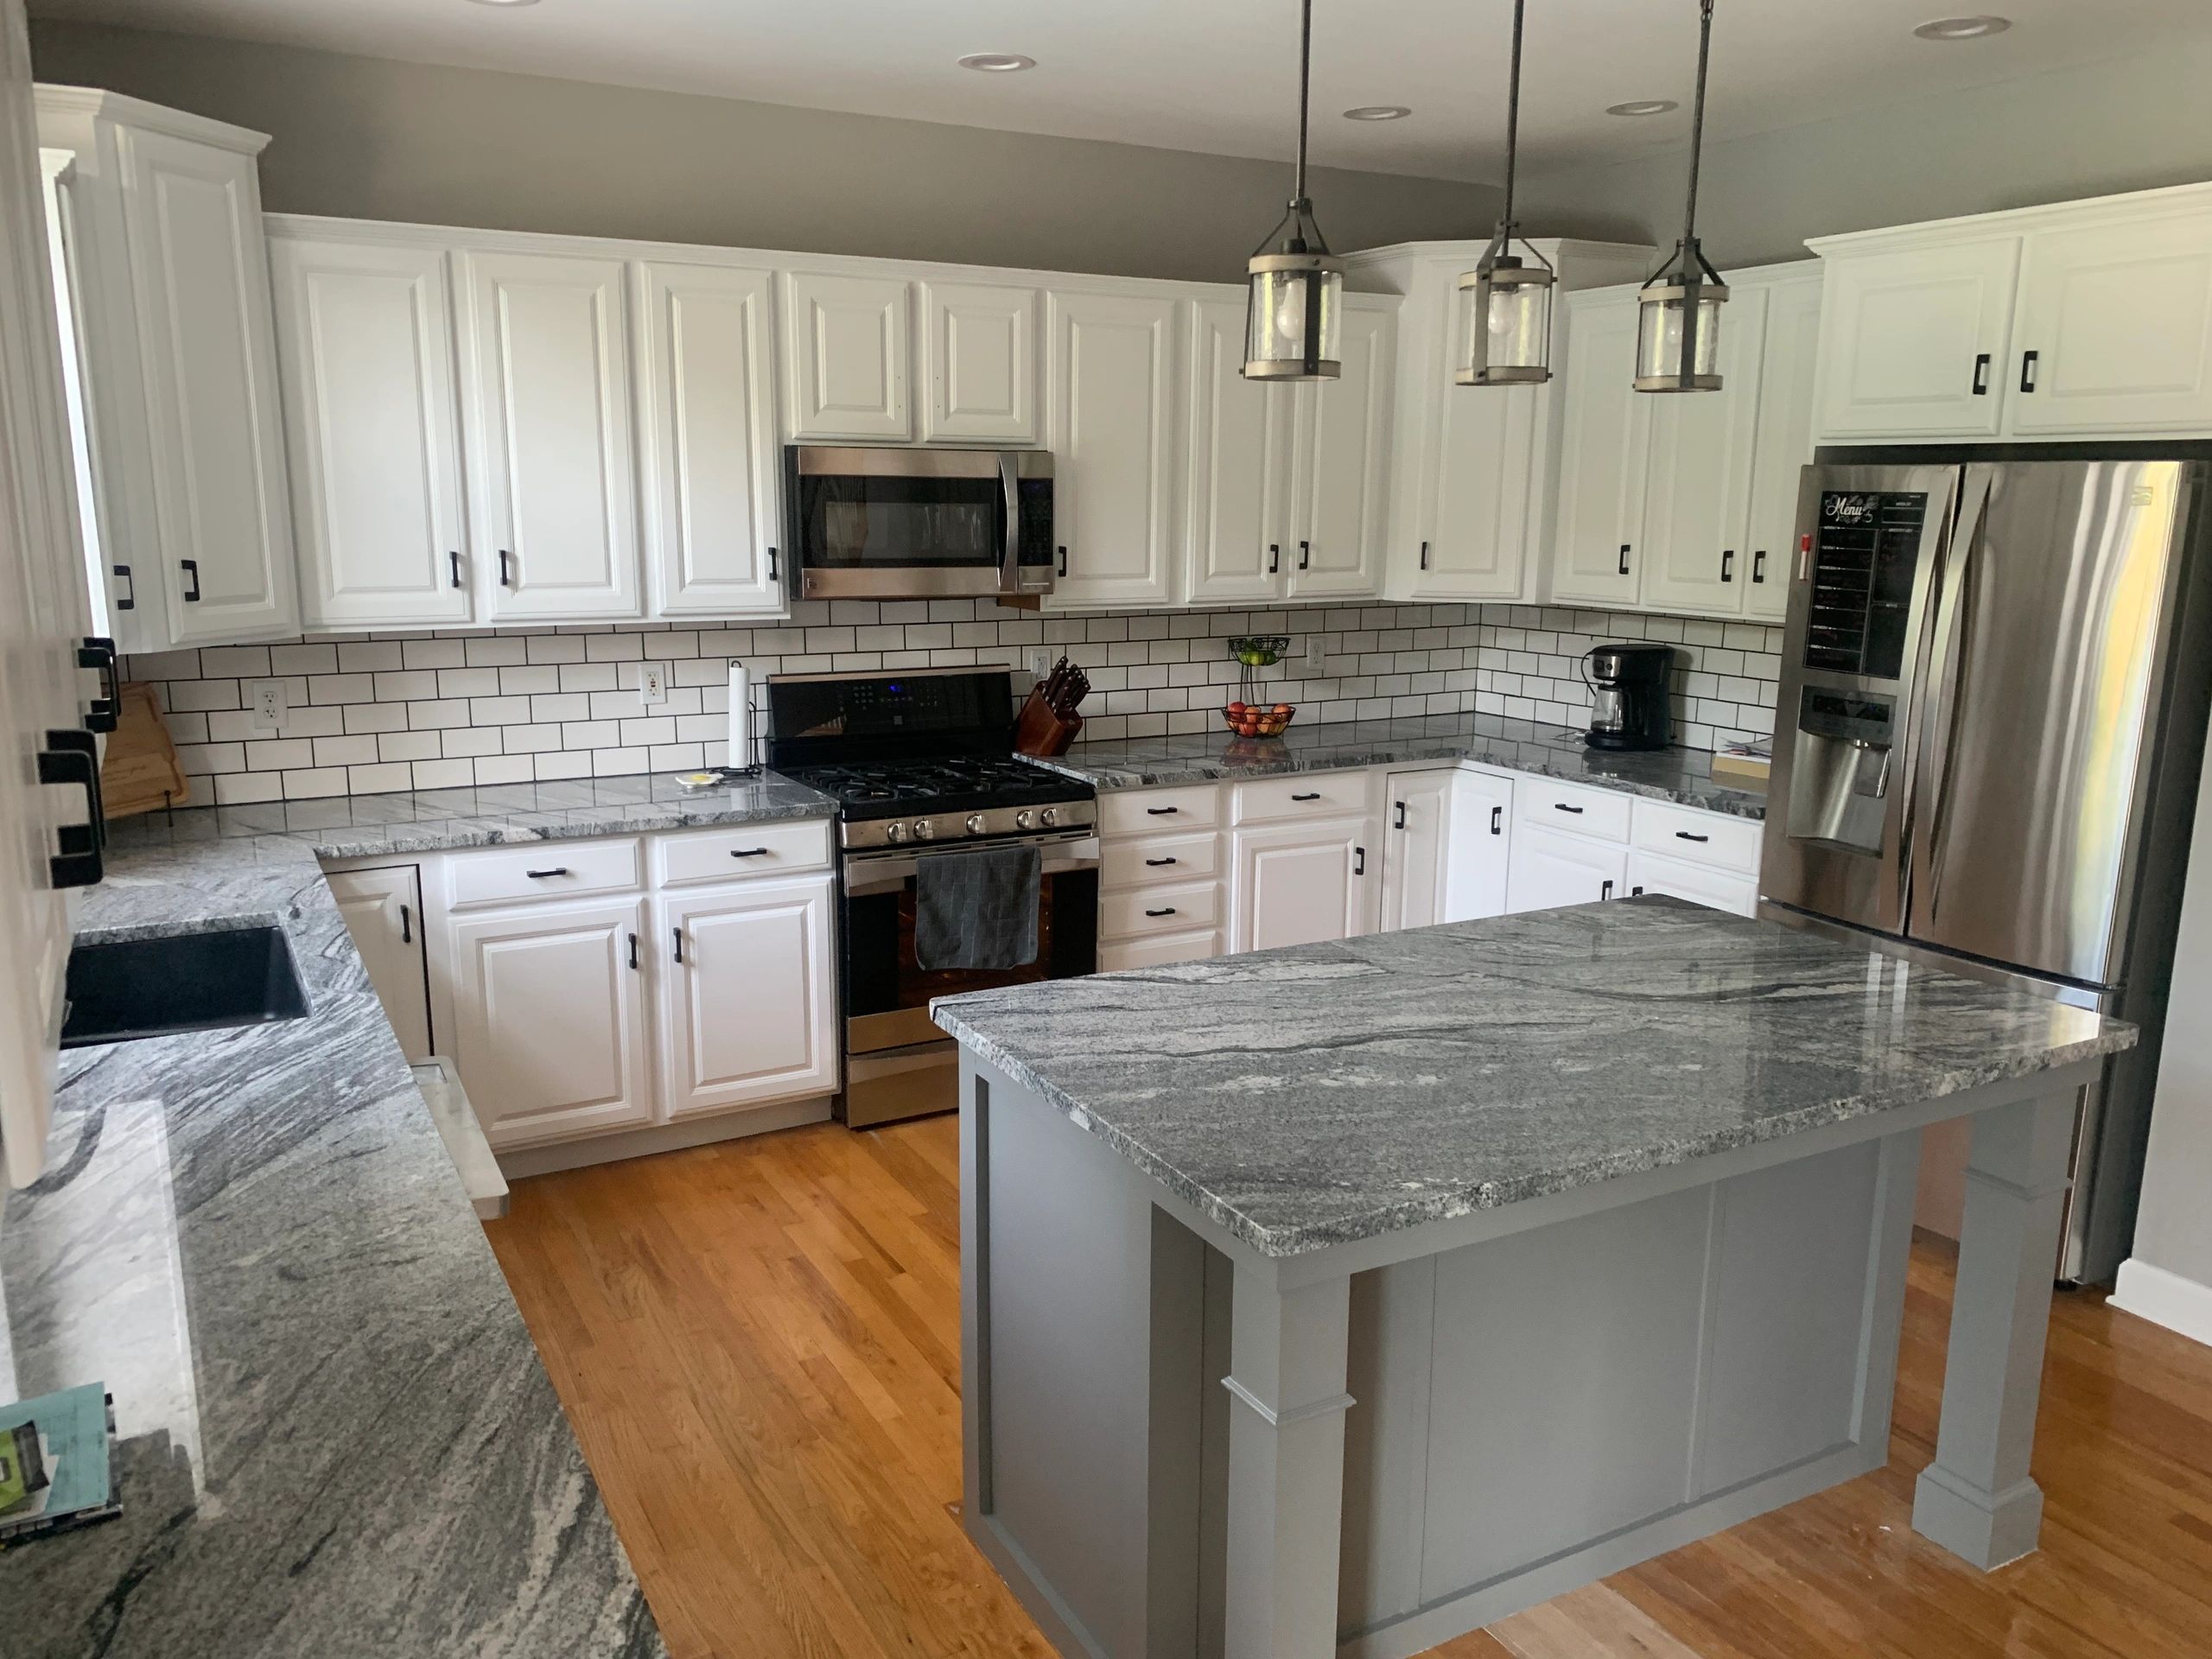 A & C - Granite and Quartz, Kitchen Countertops, Countertops